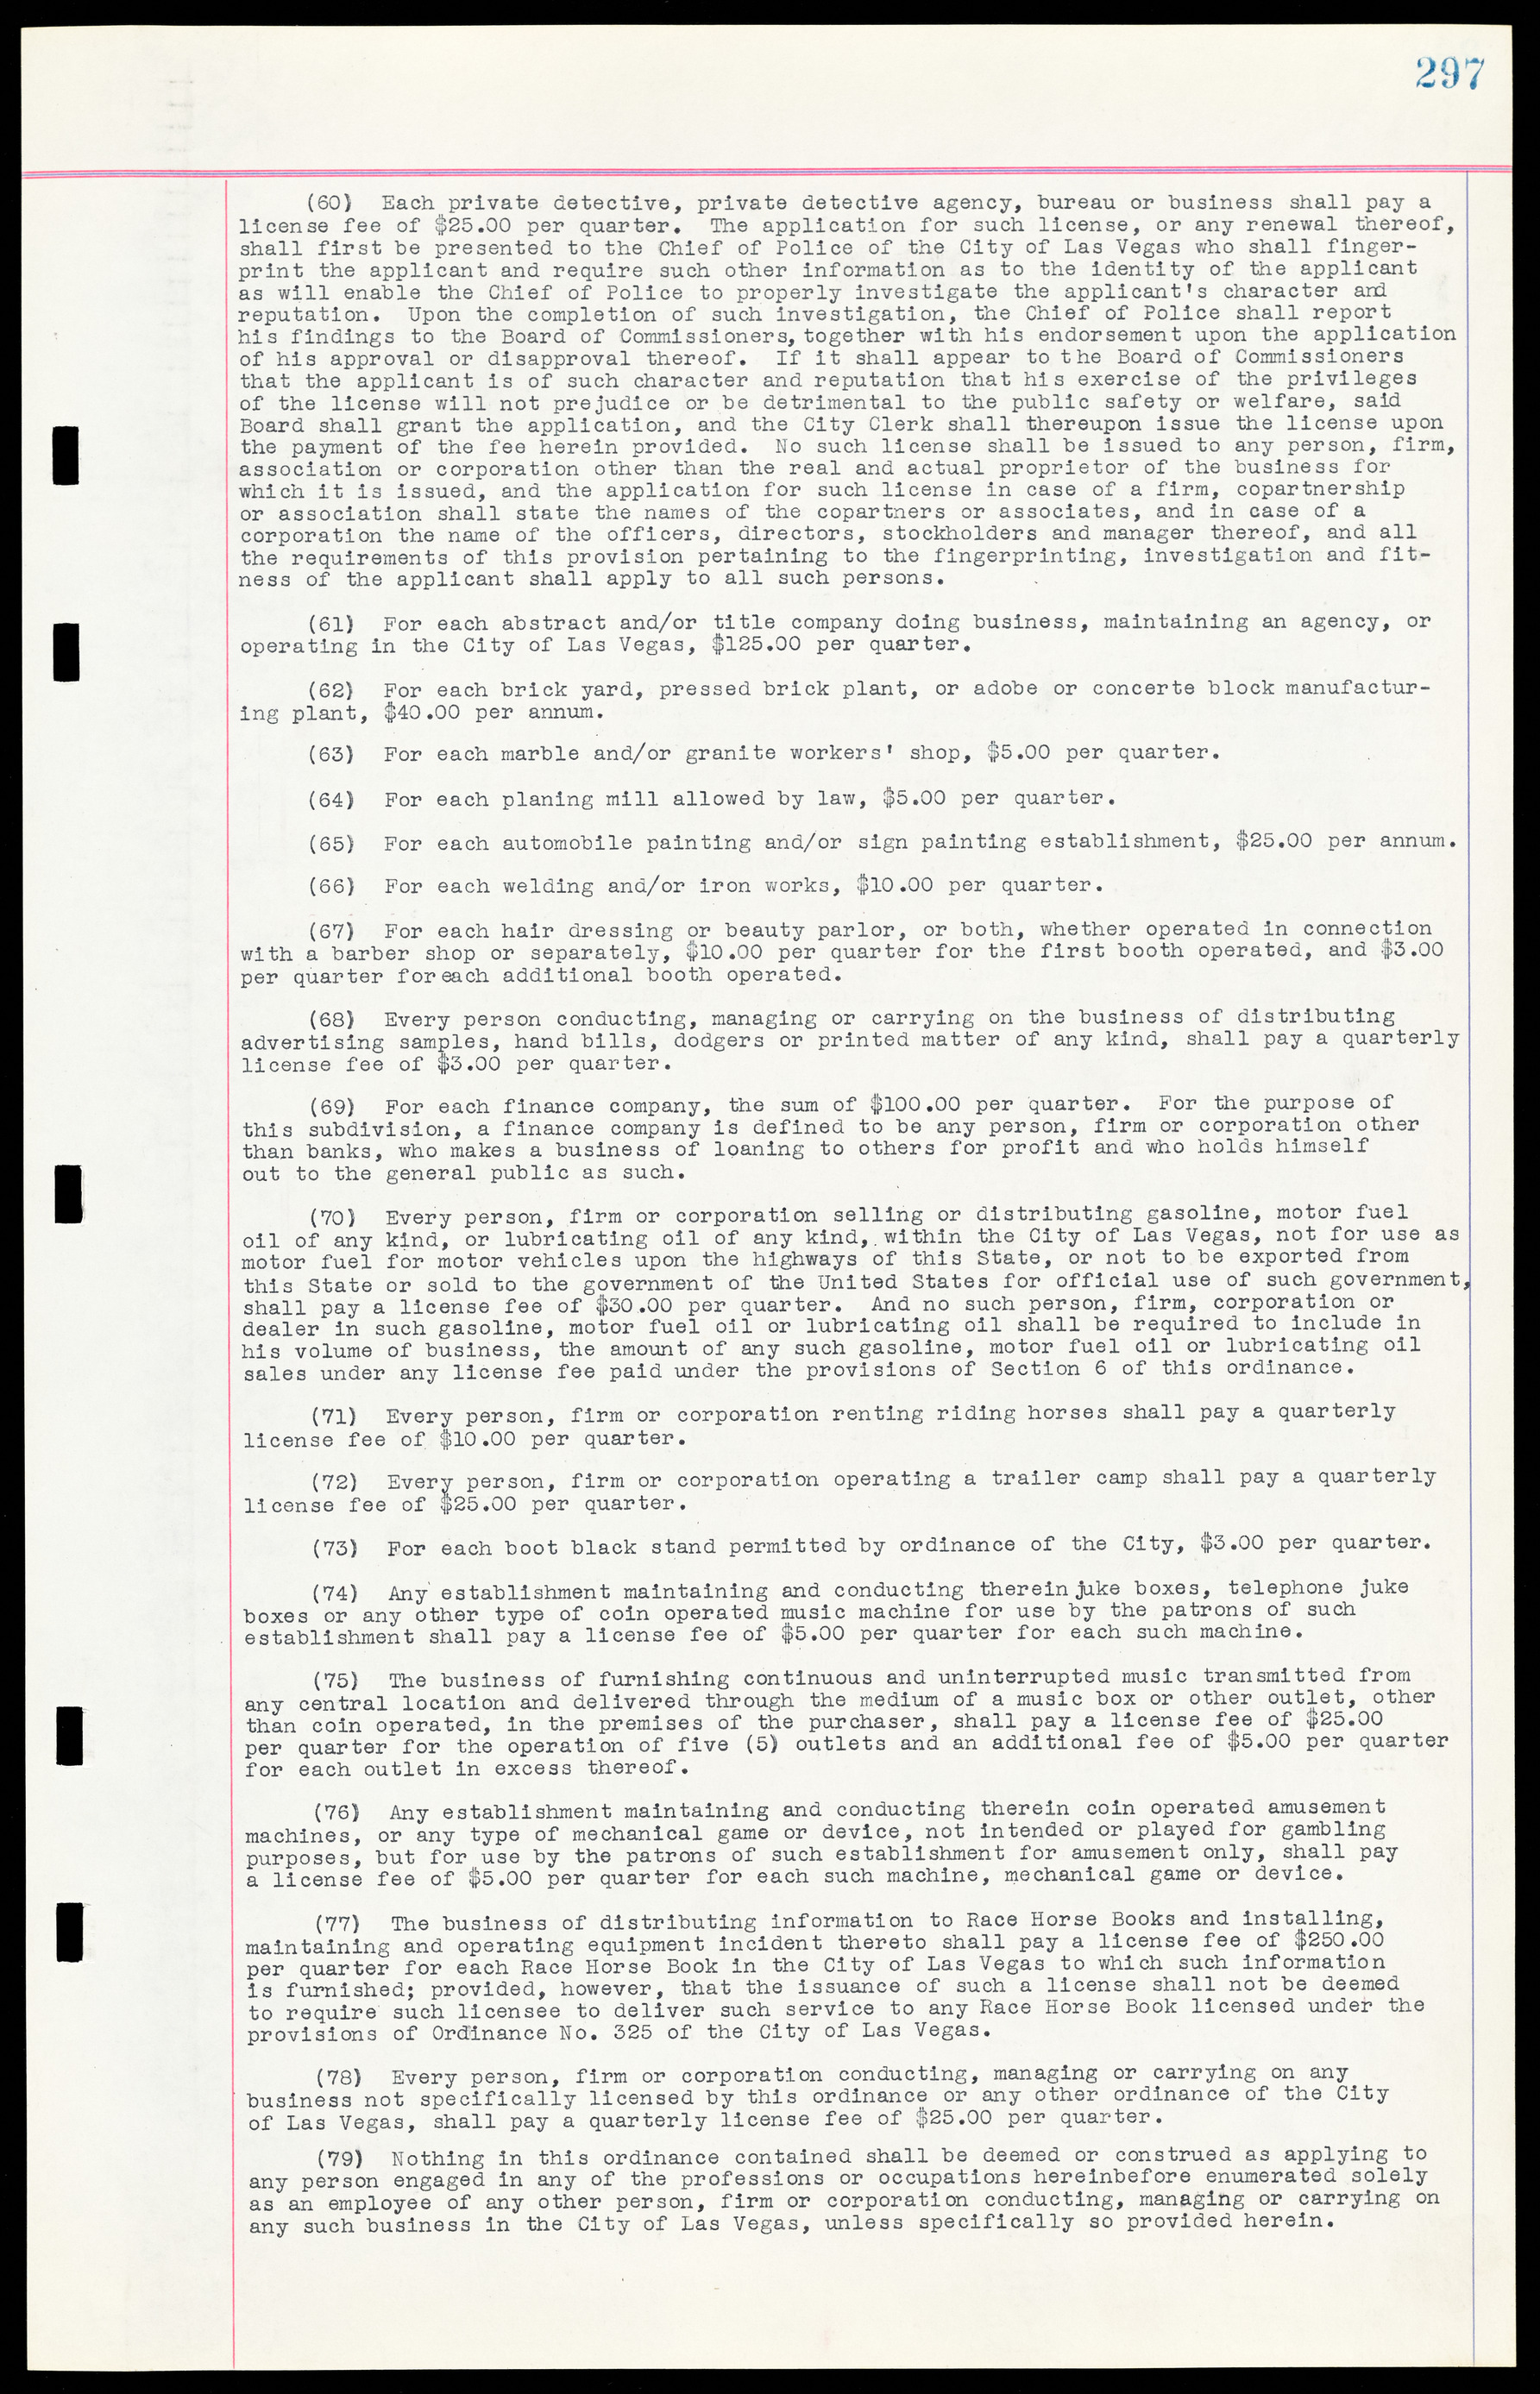 Las Vegas City Ordinances, March 31, 1933 to October 25, 1950, lvc000014-326